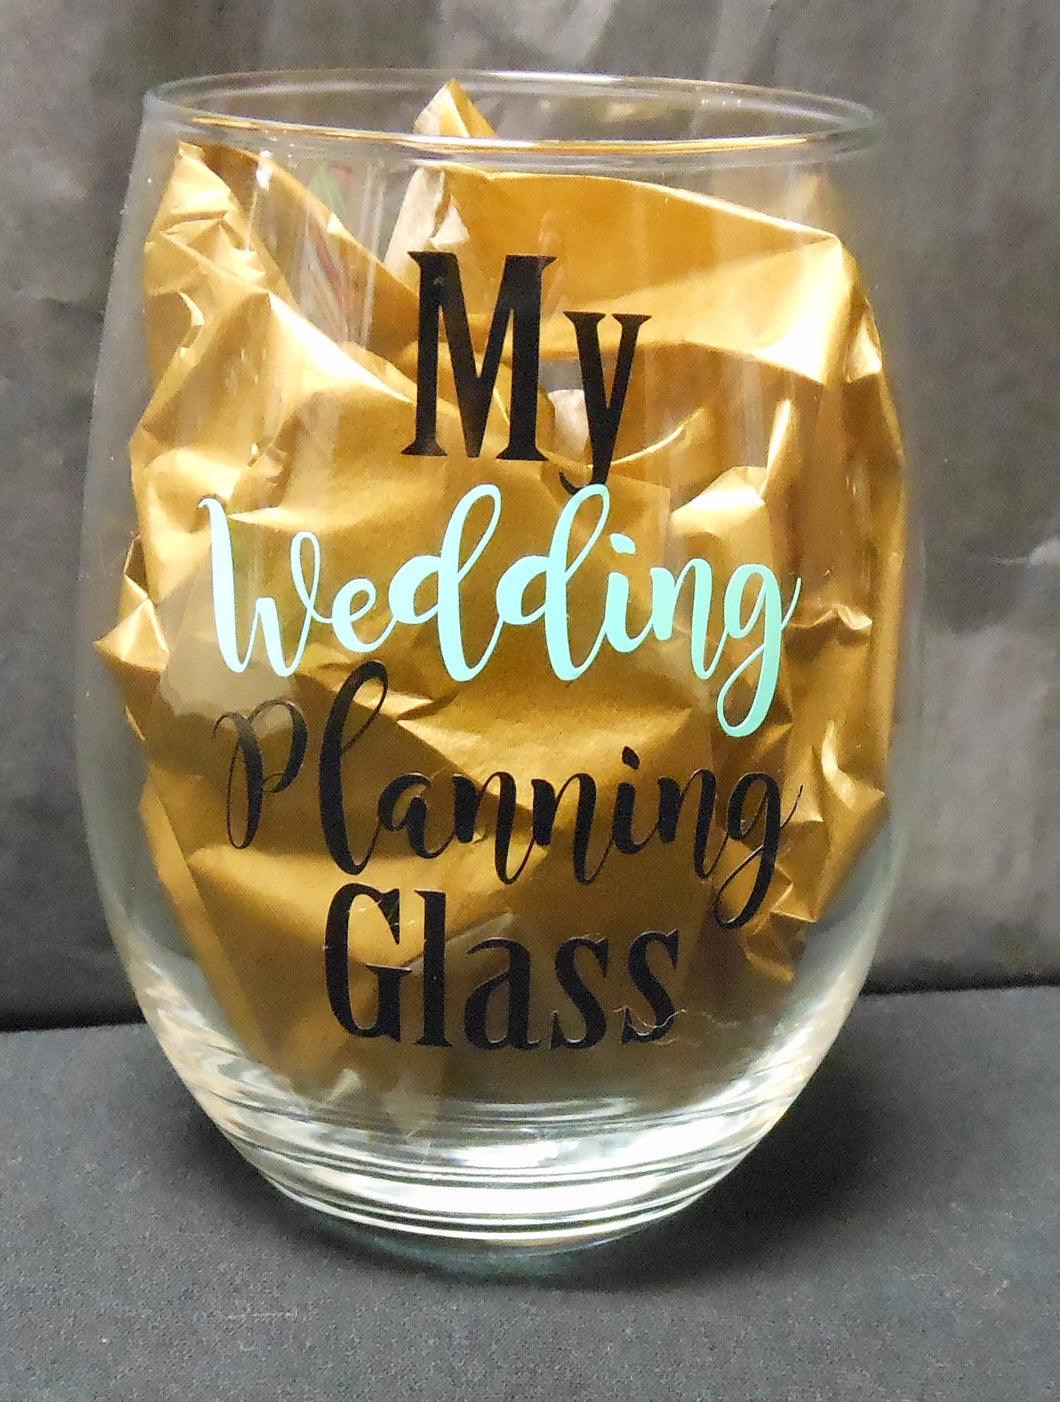 MY WEDDING PLANNING STEMLESS WINE GLASS